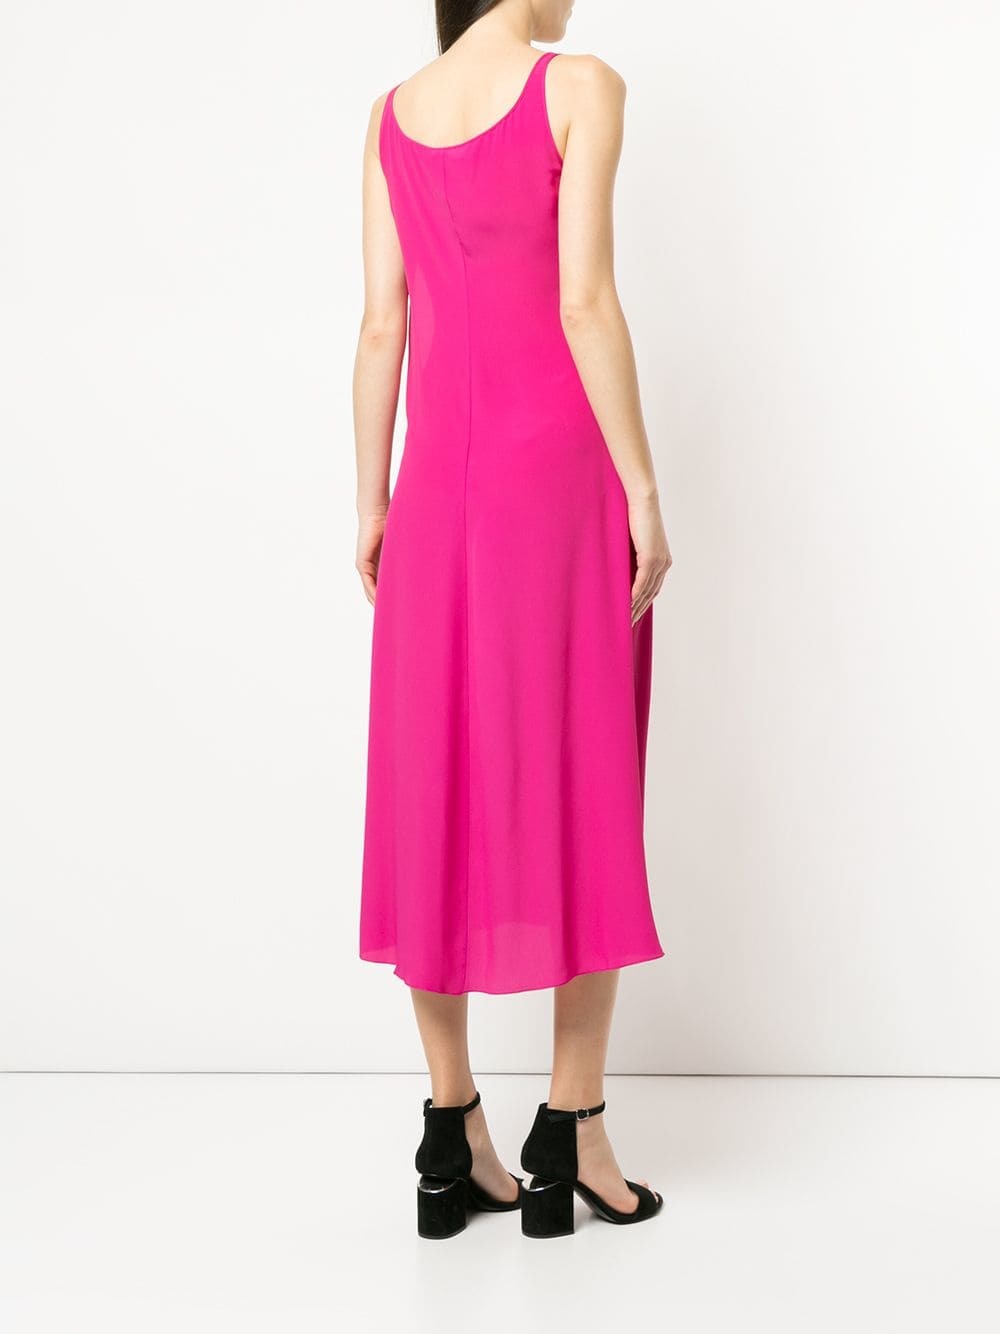 N°21 N21 Jewel Embellished Drop Waist Dress, $441 | farfetch.com ...